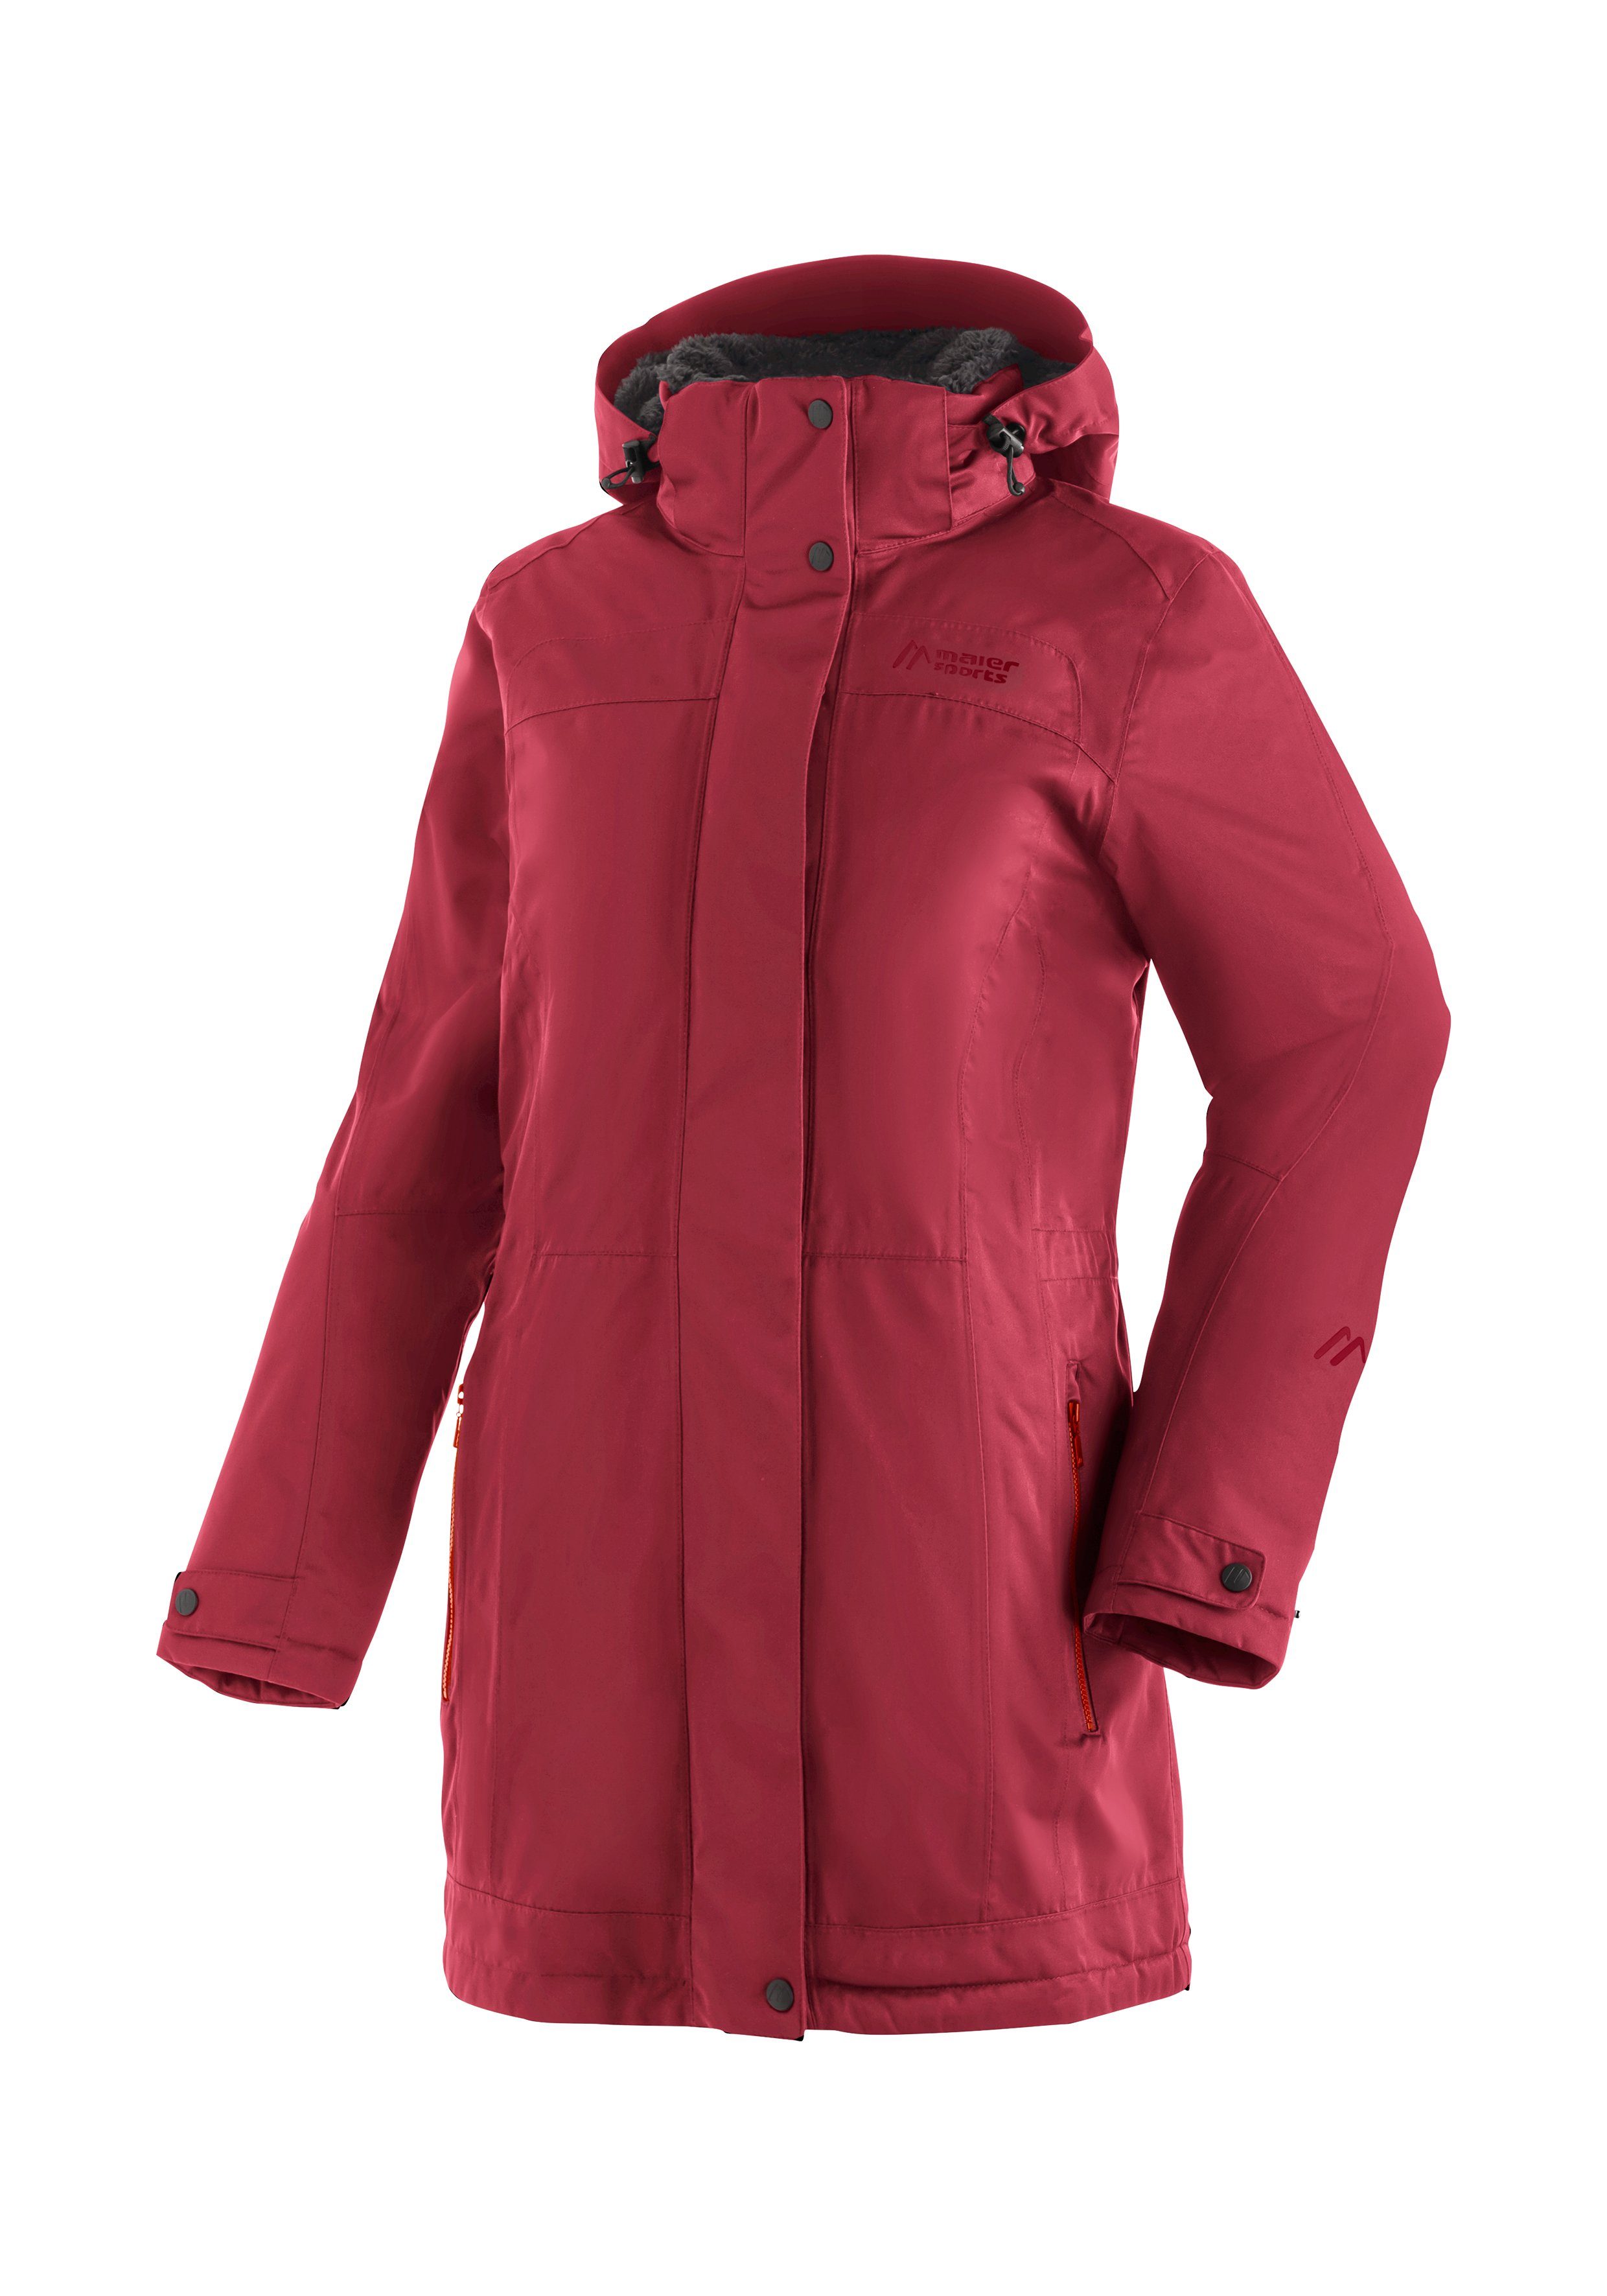 Maier Sports Funktionsjacke Lisa 2 Wetterschutz mit bordeaux vollem Outdoor-Mantel